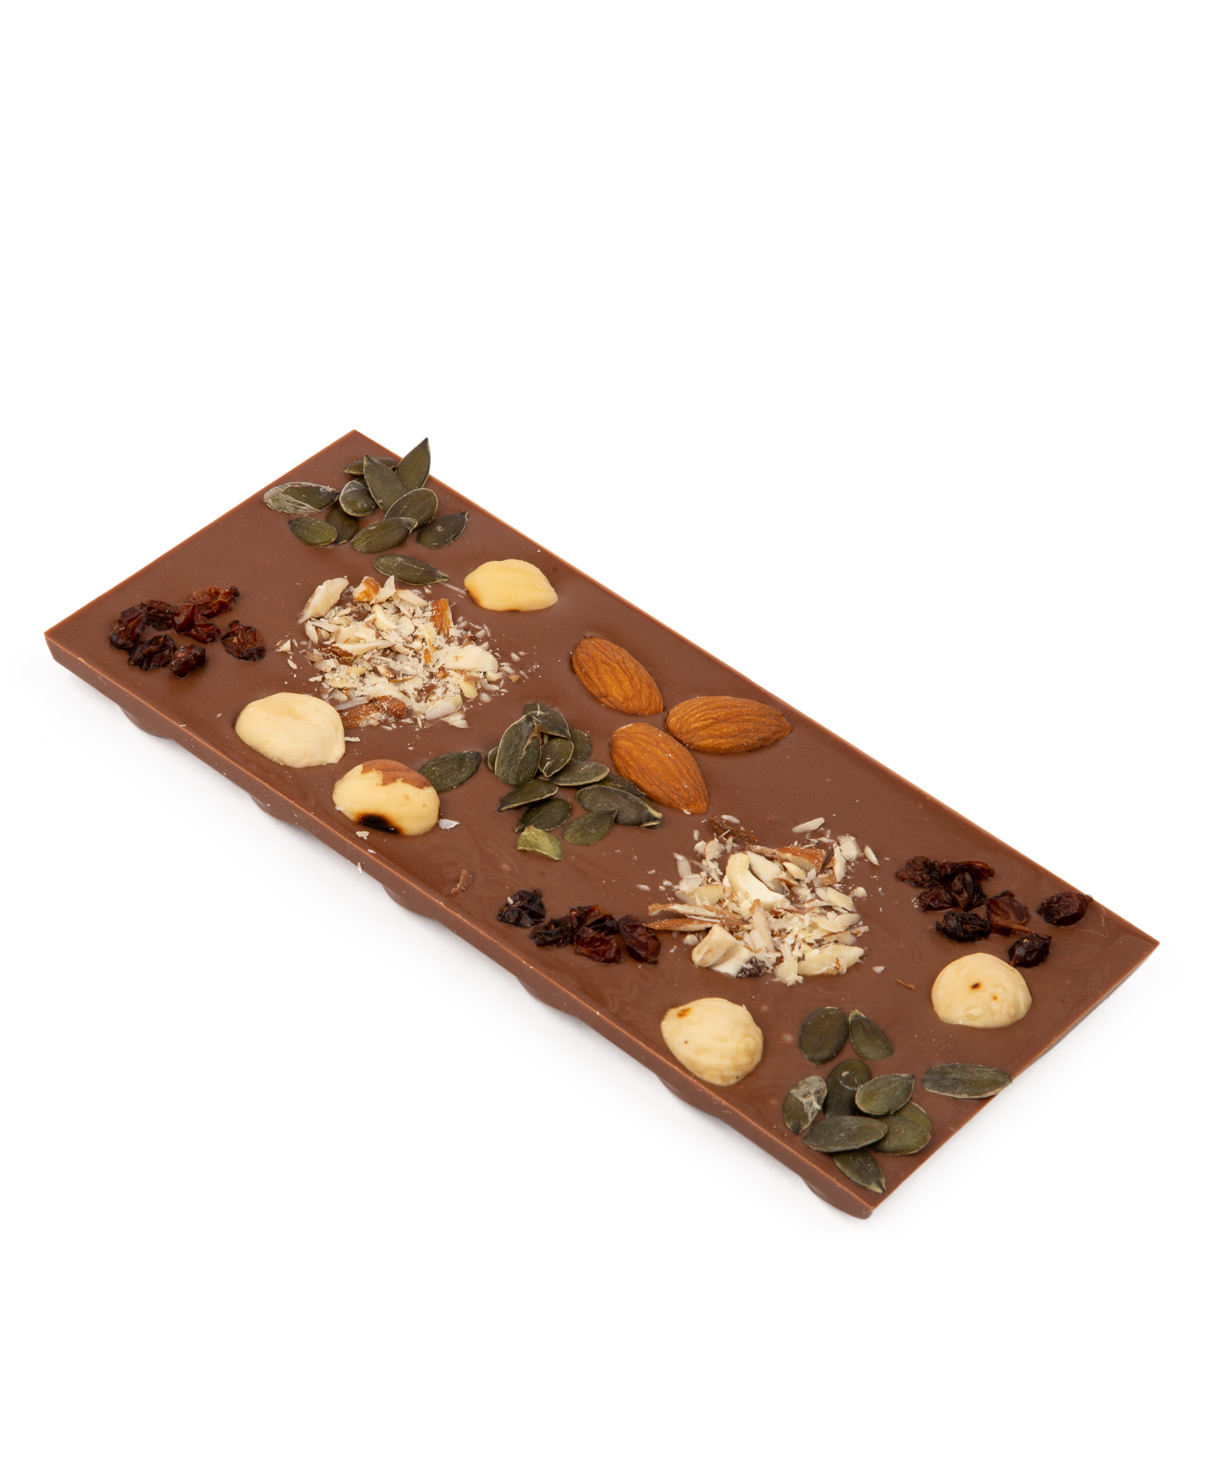 Chocolate `Lara Chocolate` with legumes